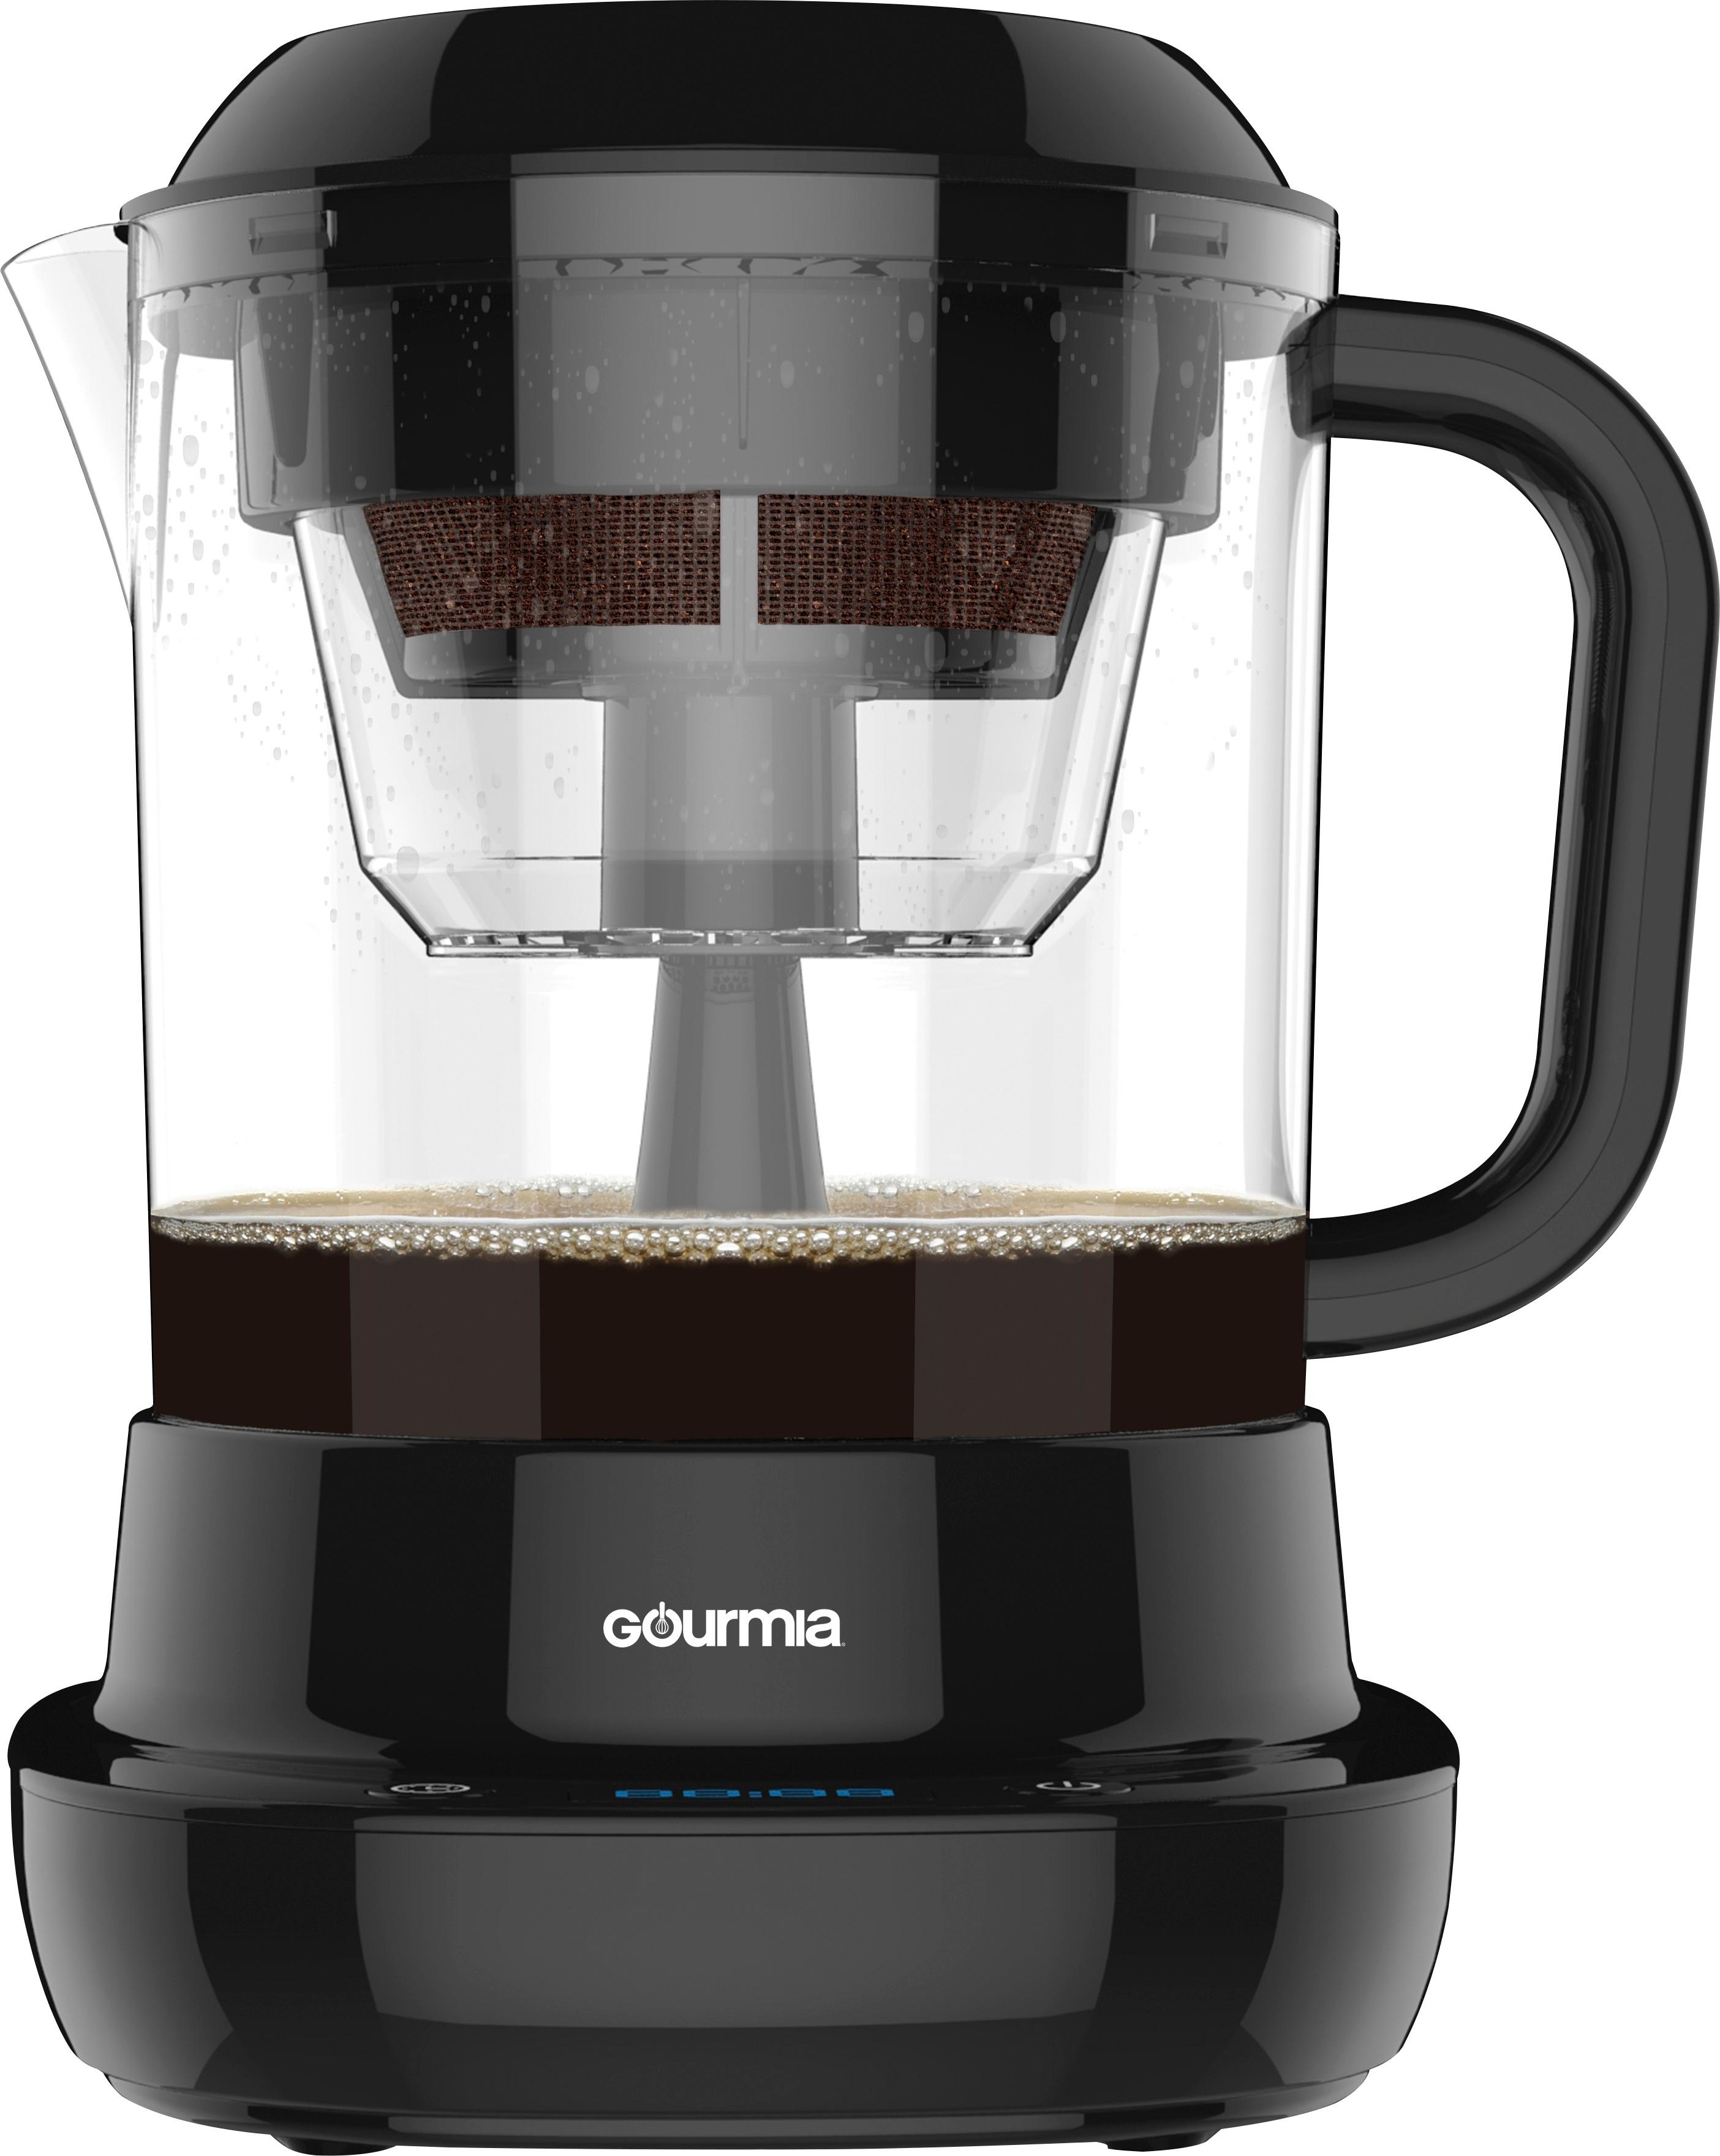 Gourmia Cold Brew Coffee Maker Black GCM6800 - Best Buy